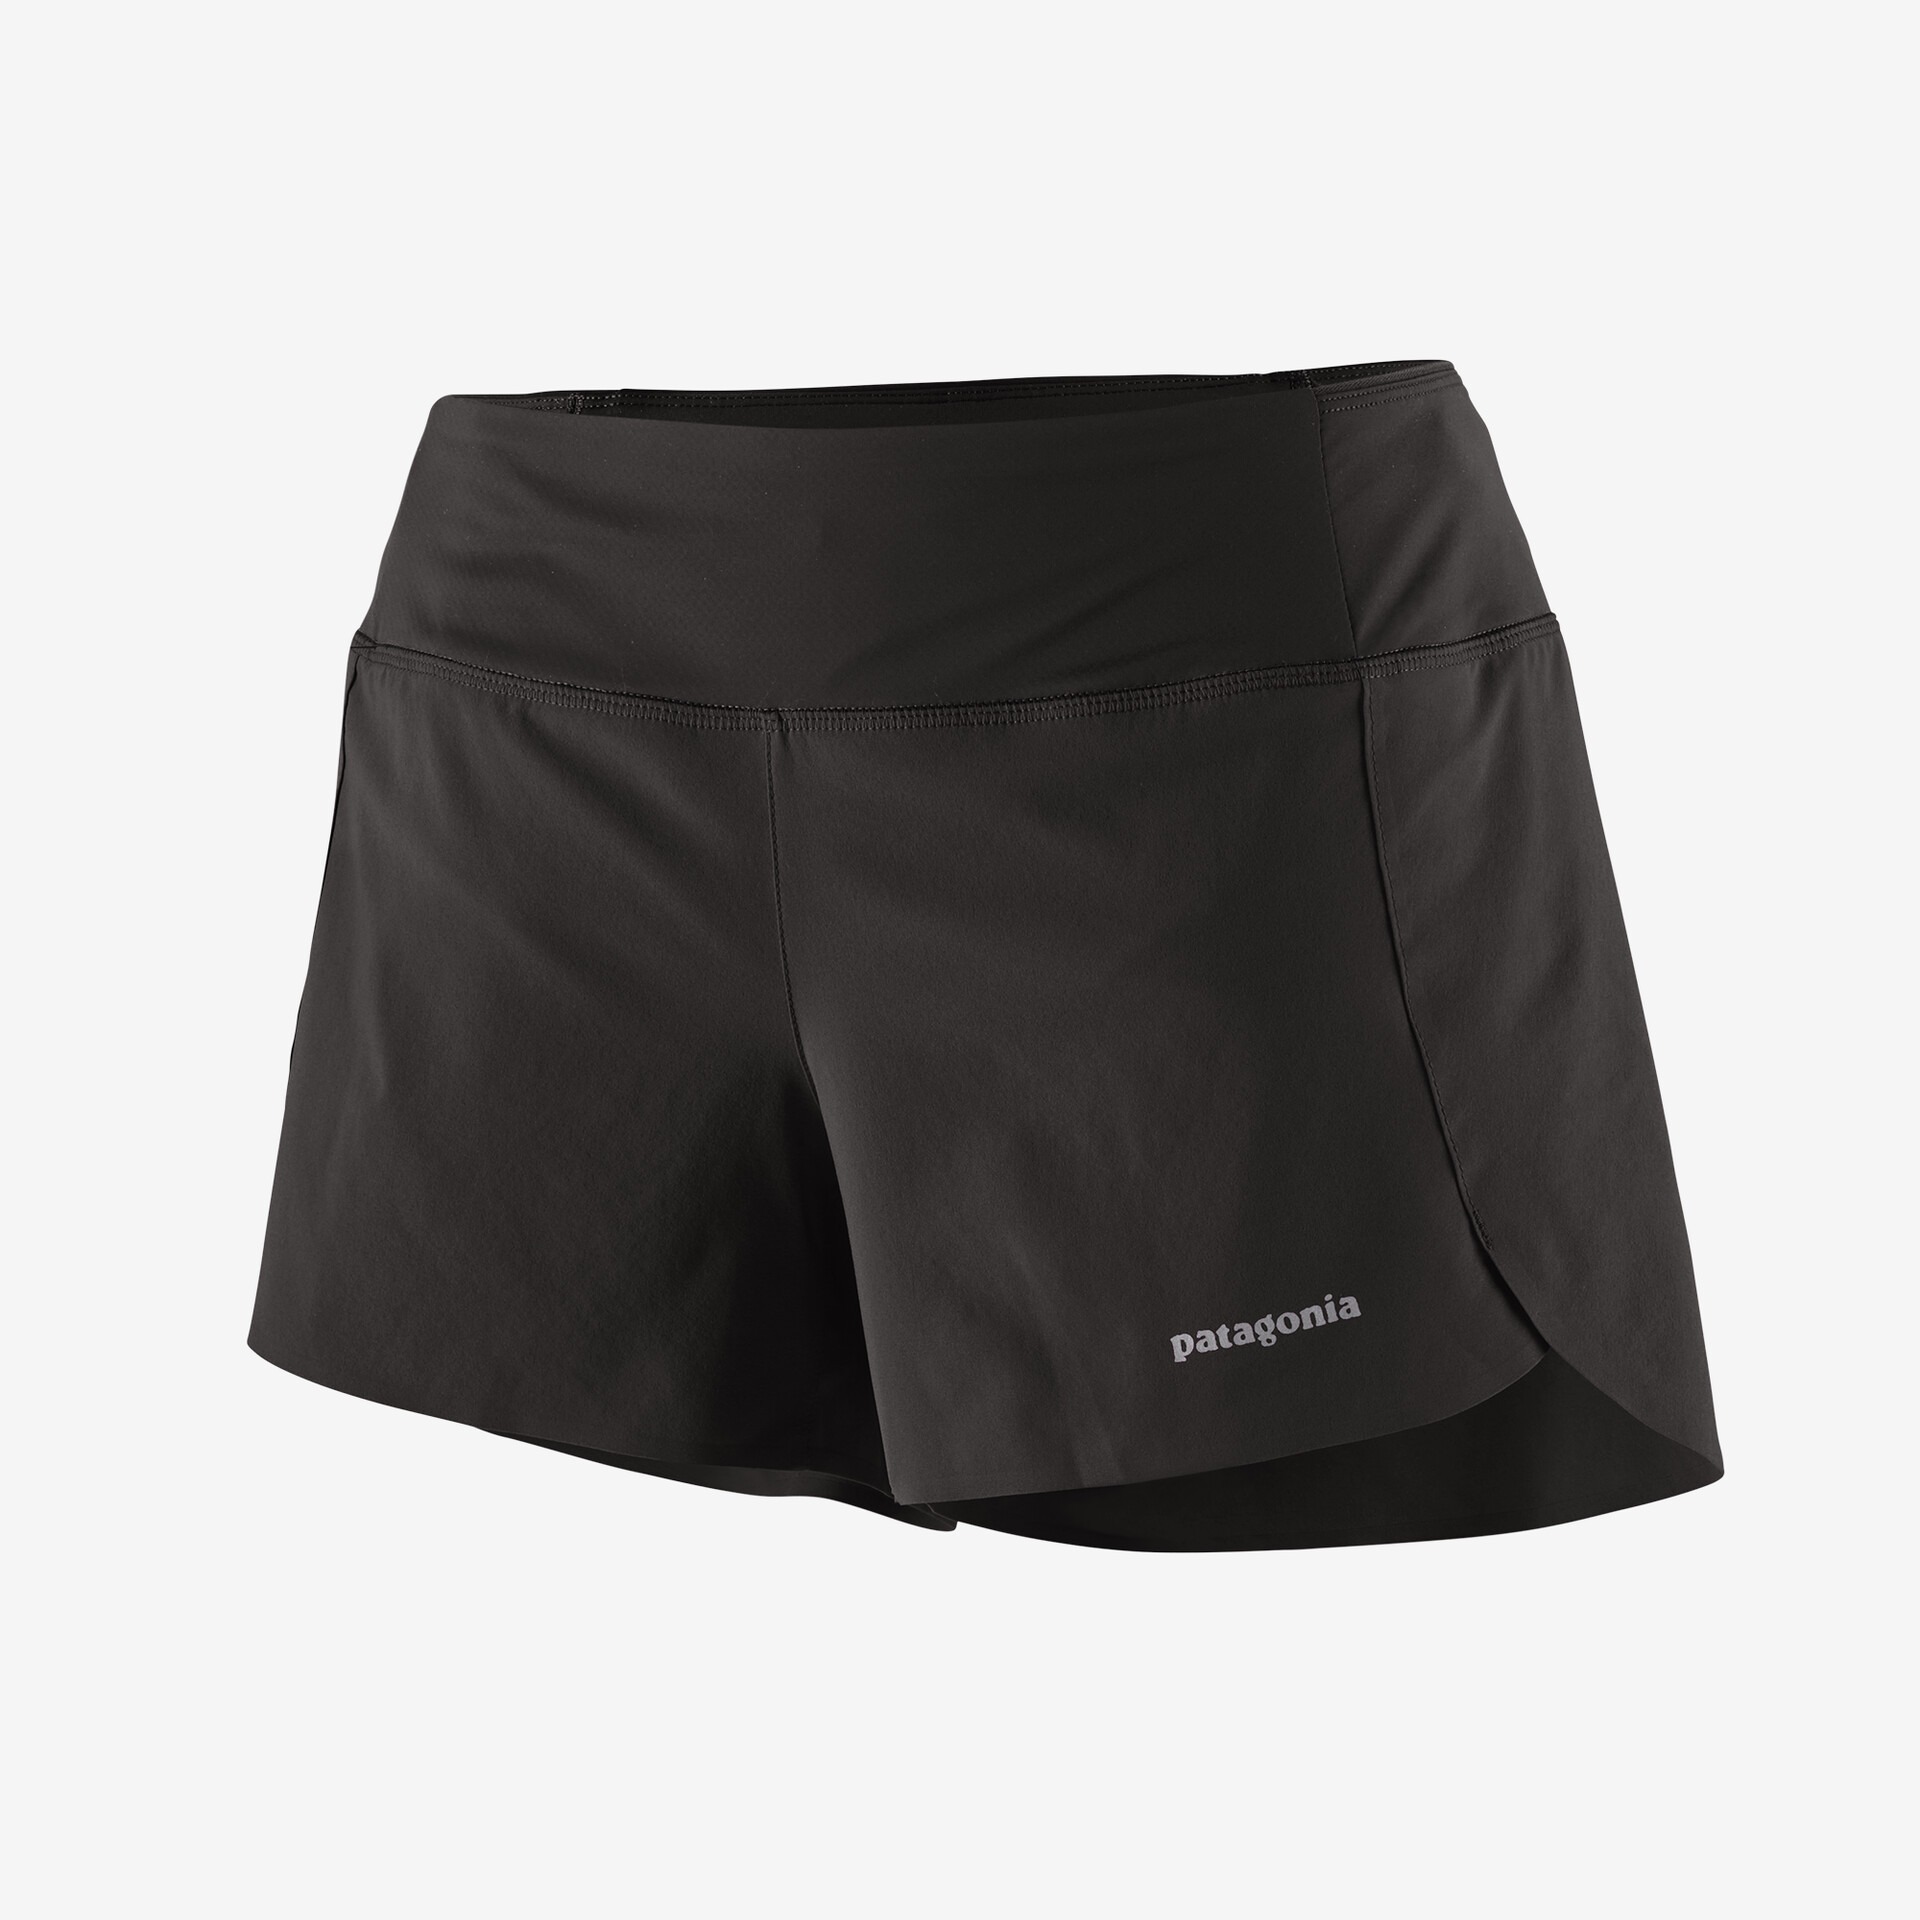 Patagonia Strider Pro Shorts 3 1/2 女款3.5吋跑步短褲